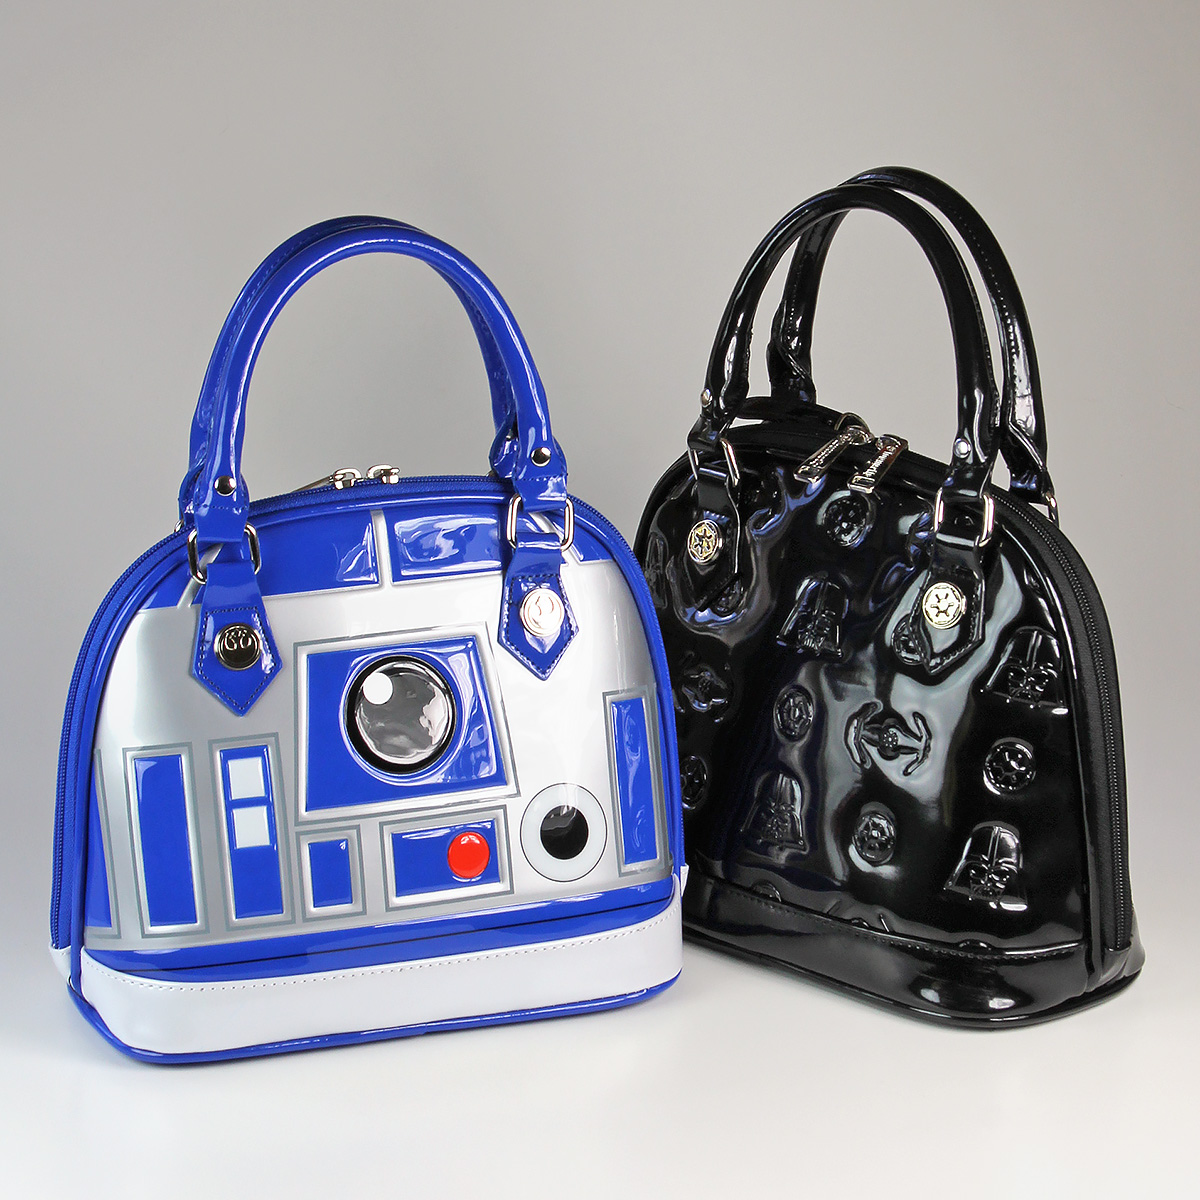 Loungefly - R2-D2 and mini Darth Vader handbags